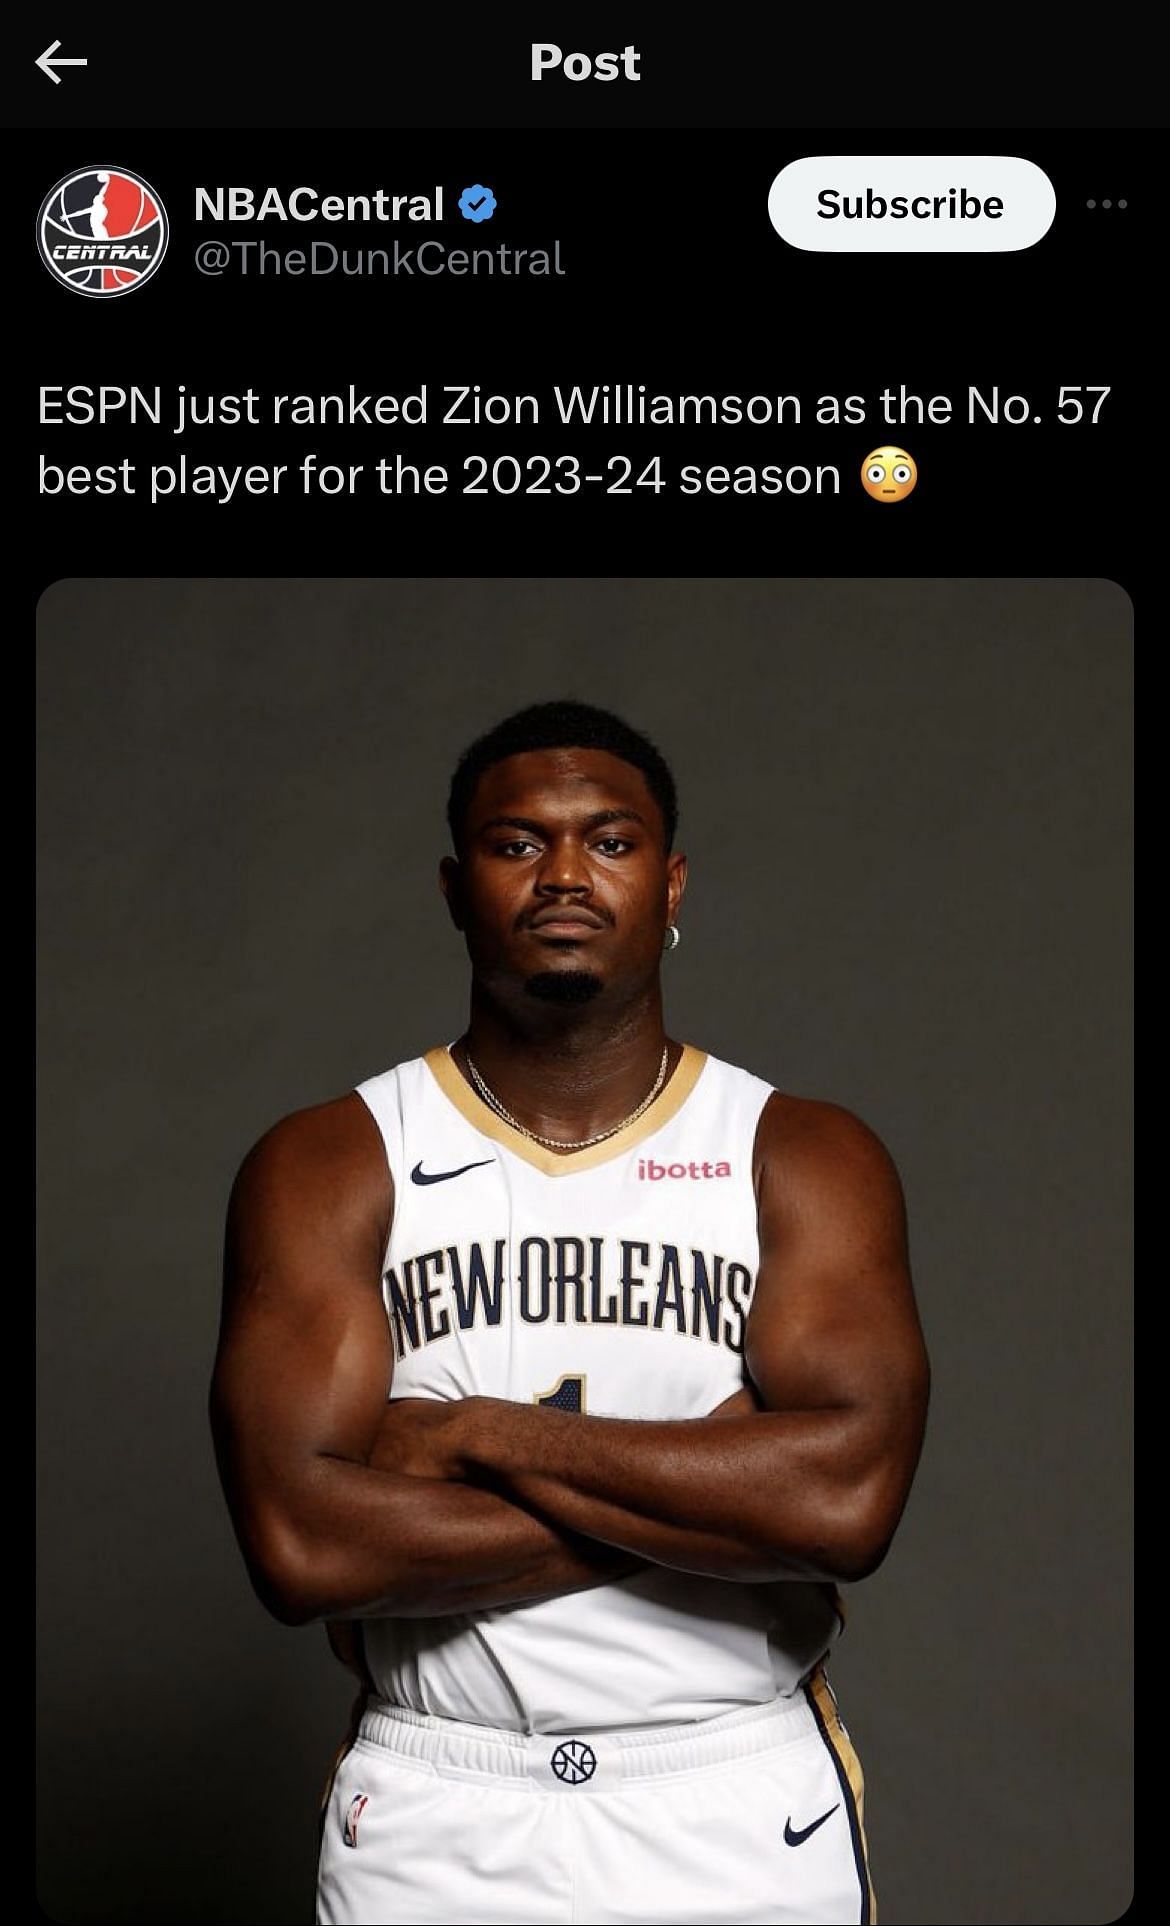 Zion Williamson Ranked No. 57 on ESPN - NBA Central&#039;s X Post